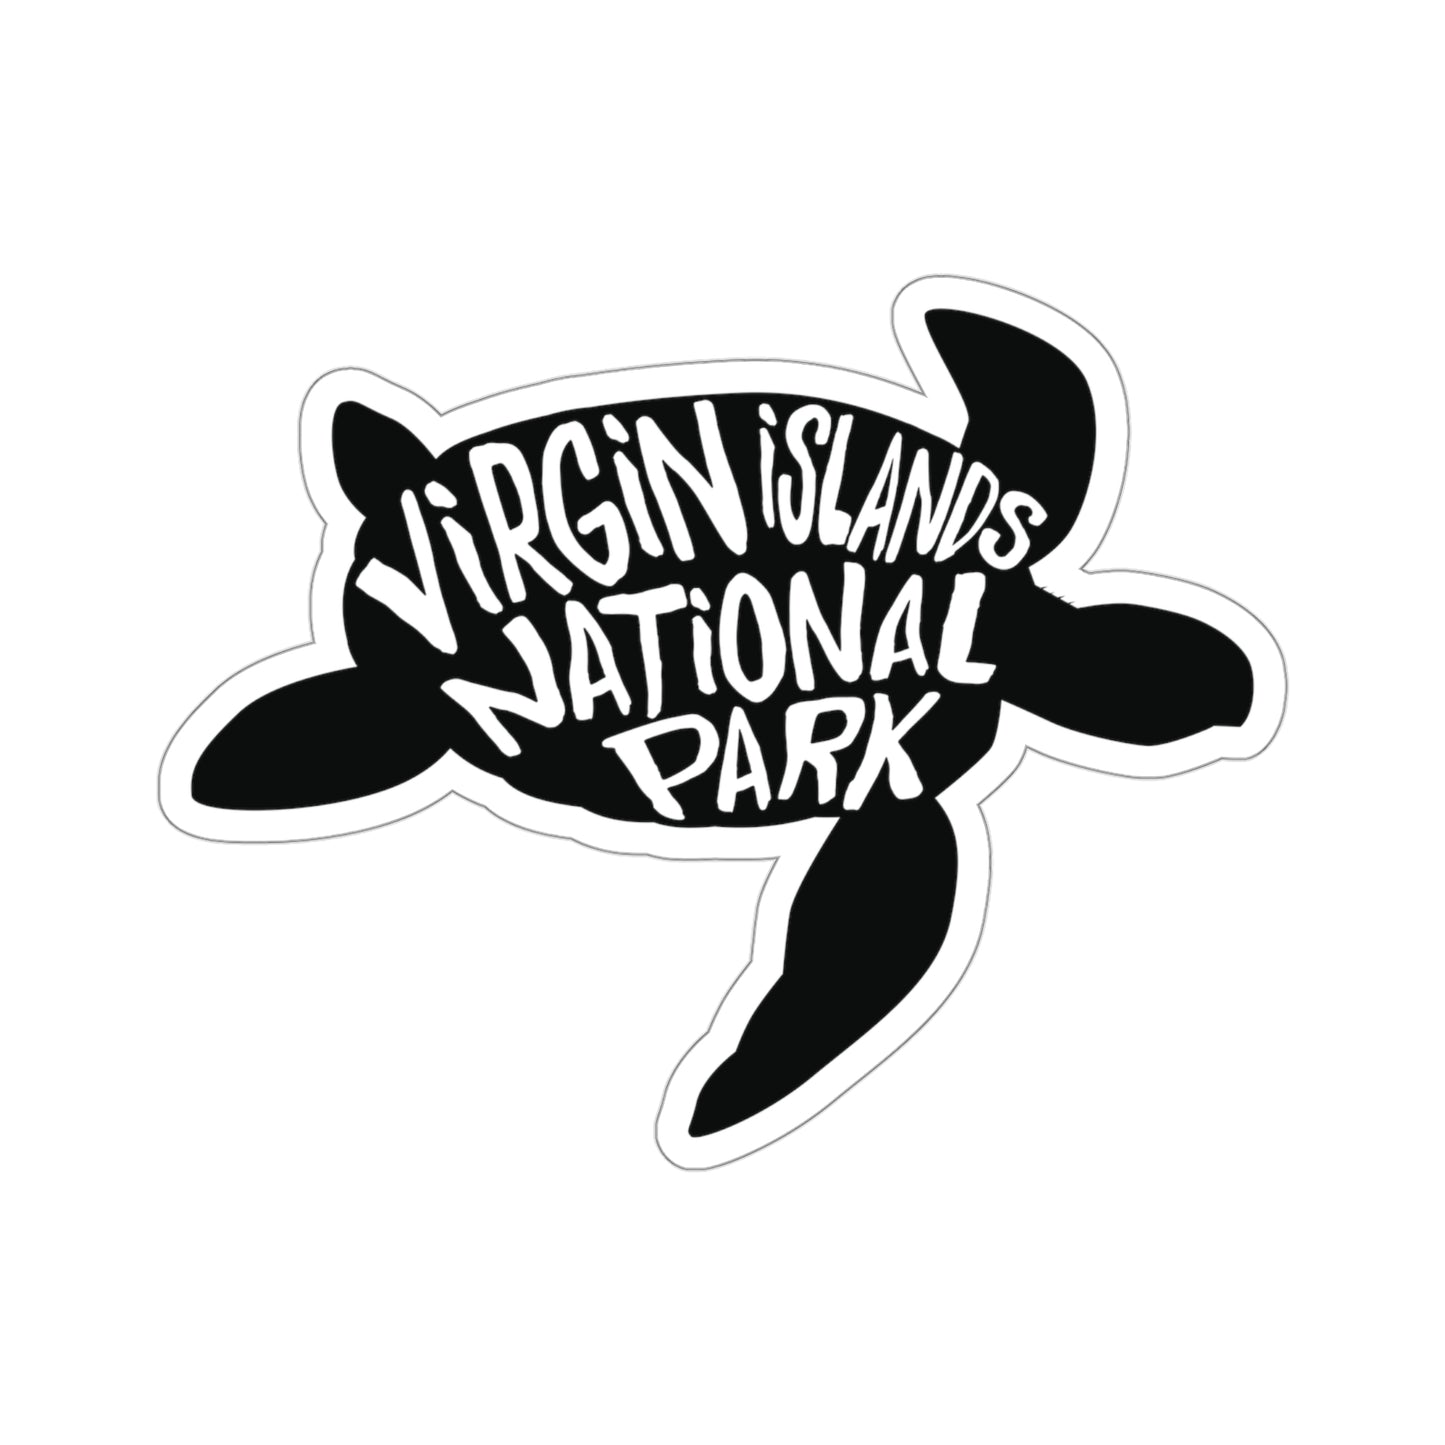 Virgin Islands National Park Sticker - Turtle